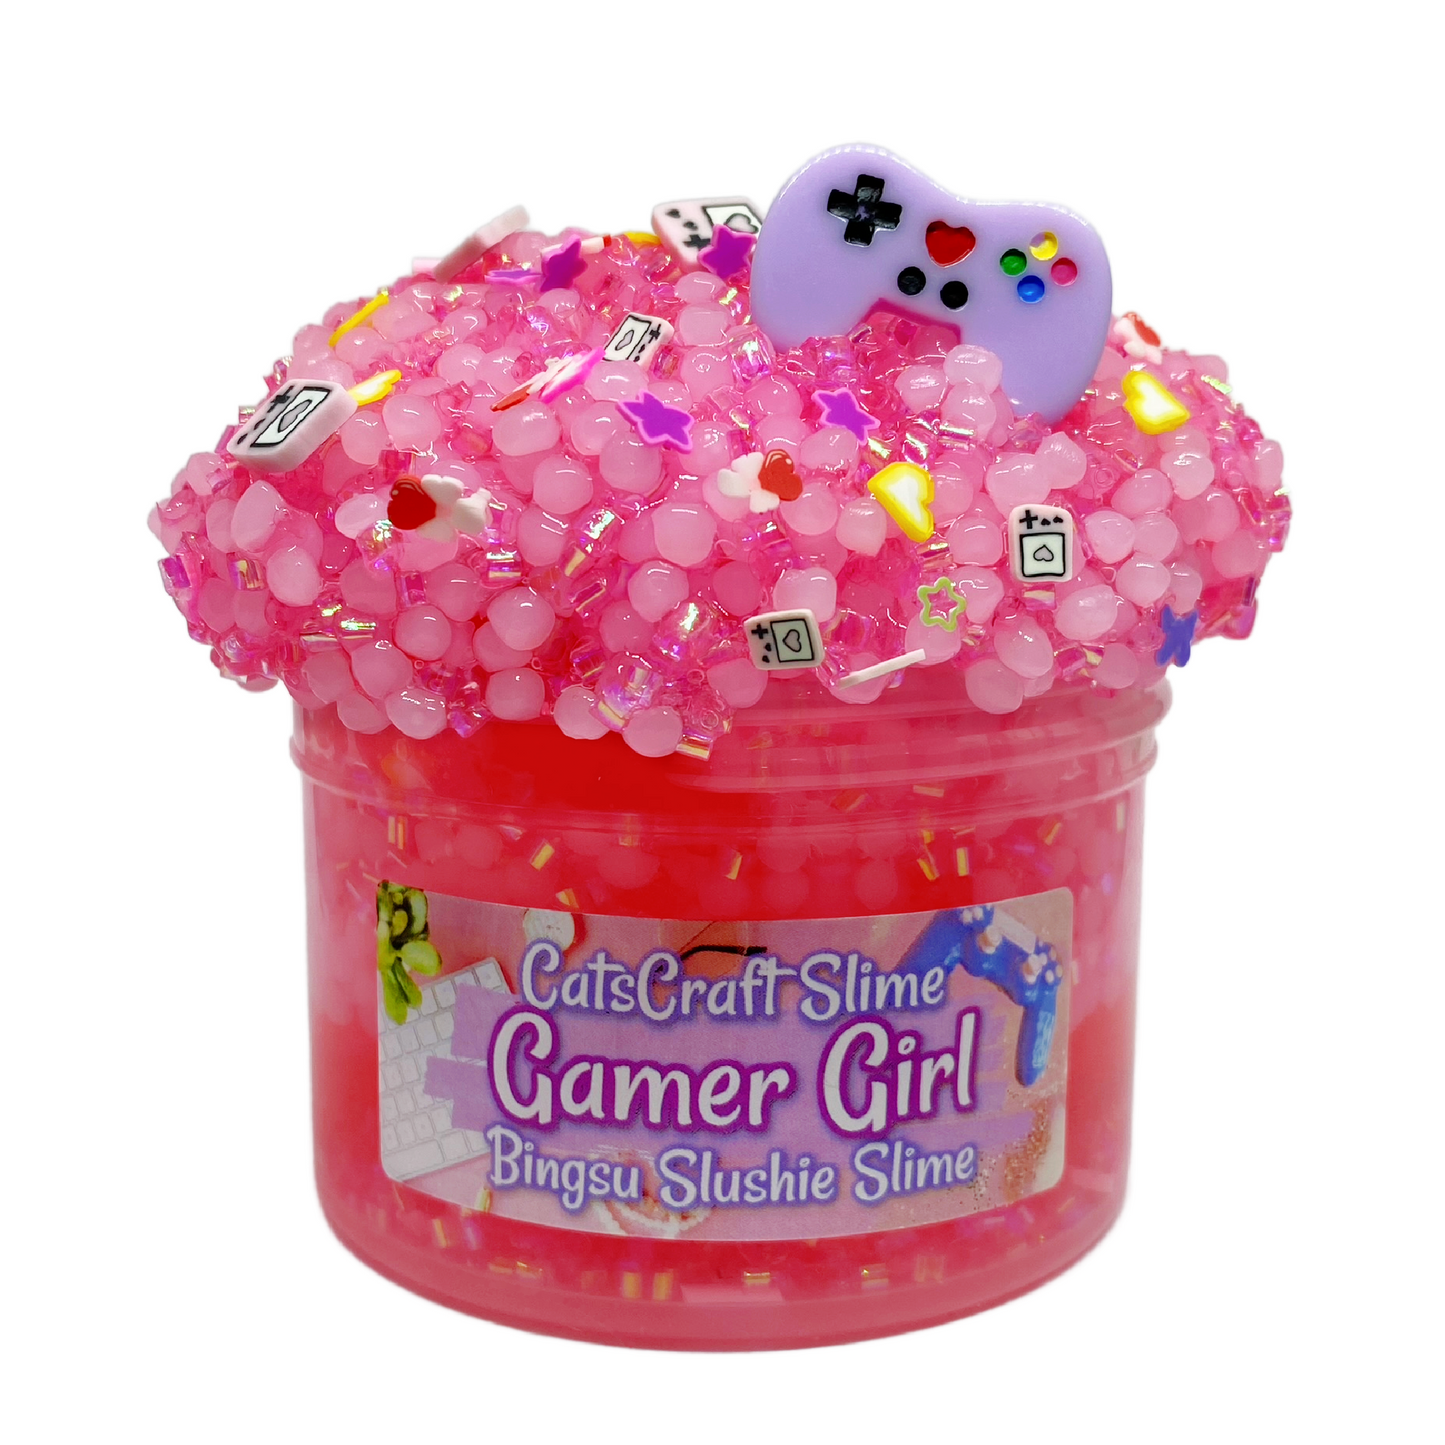 Bingsu Slushie Slime "Gamer Girl" SCENTED pink crystal clear bingsu and slushee bead crunchy ASMR With Charm